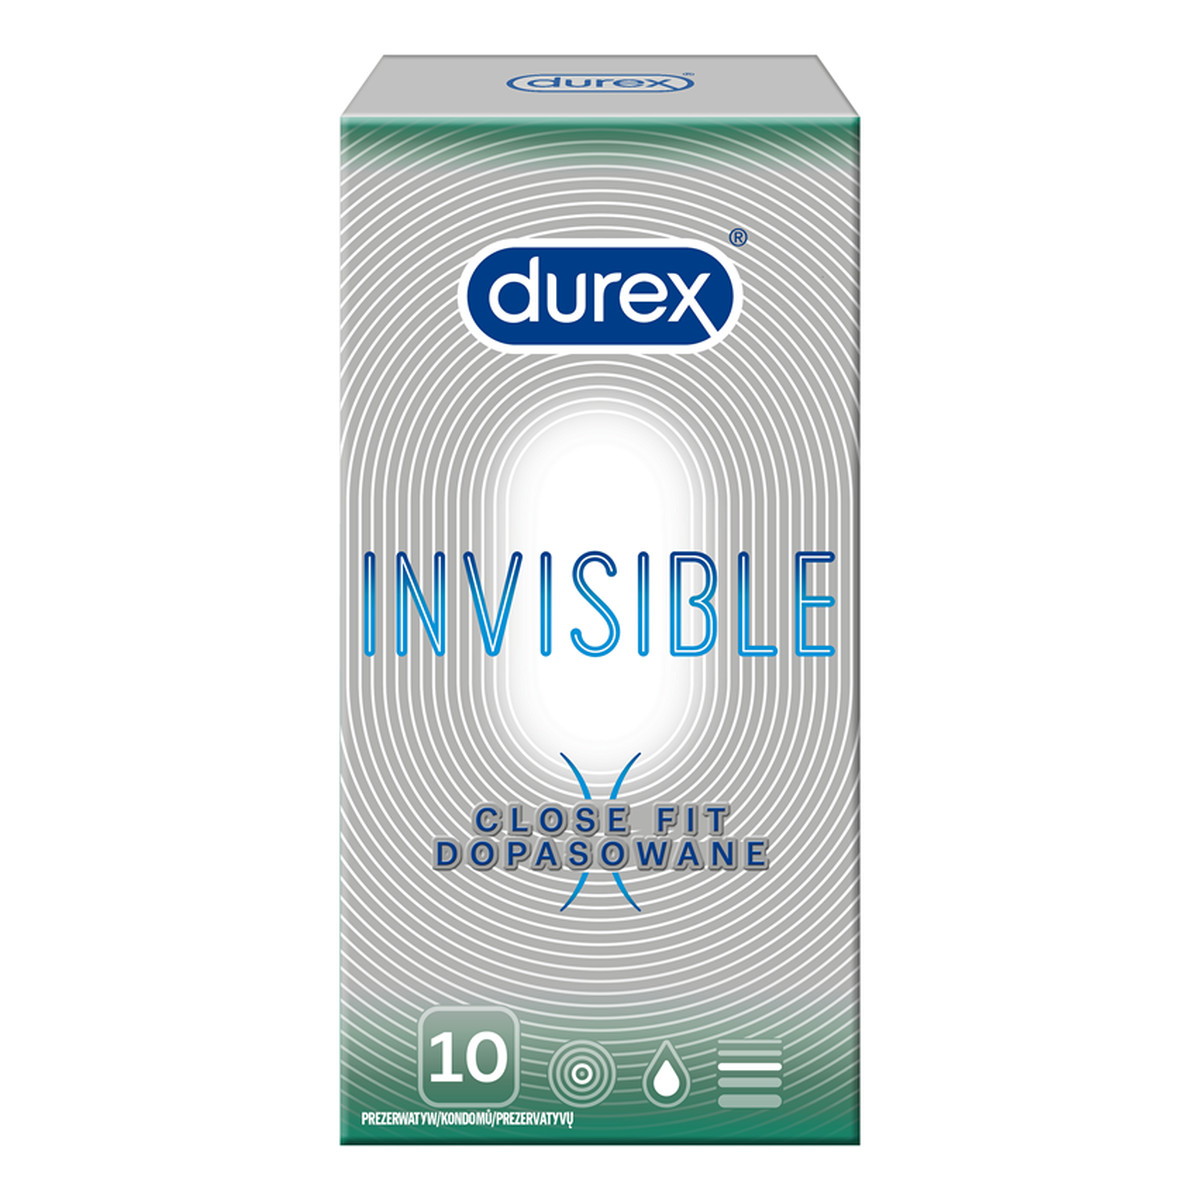 Durex Invisible close fit prezerwatywy dopasowane 10szt